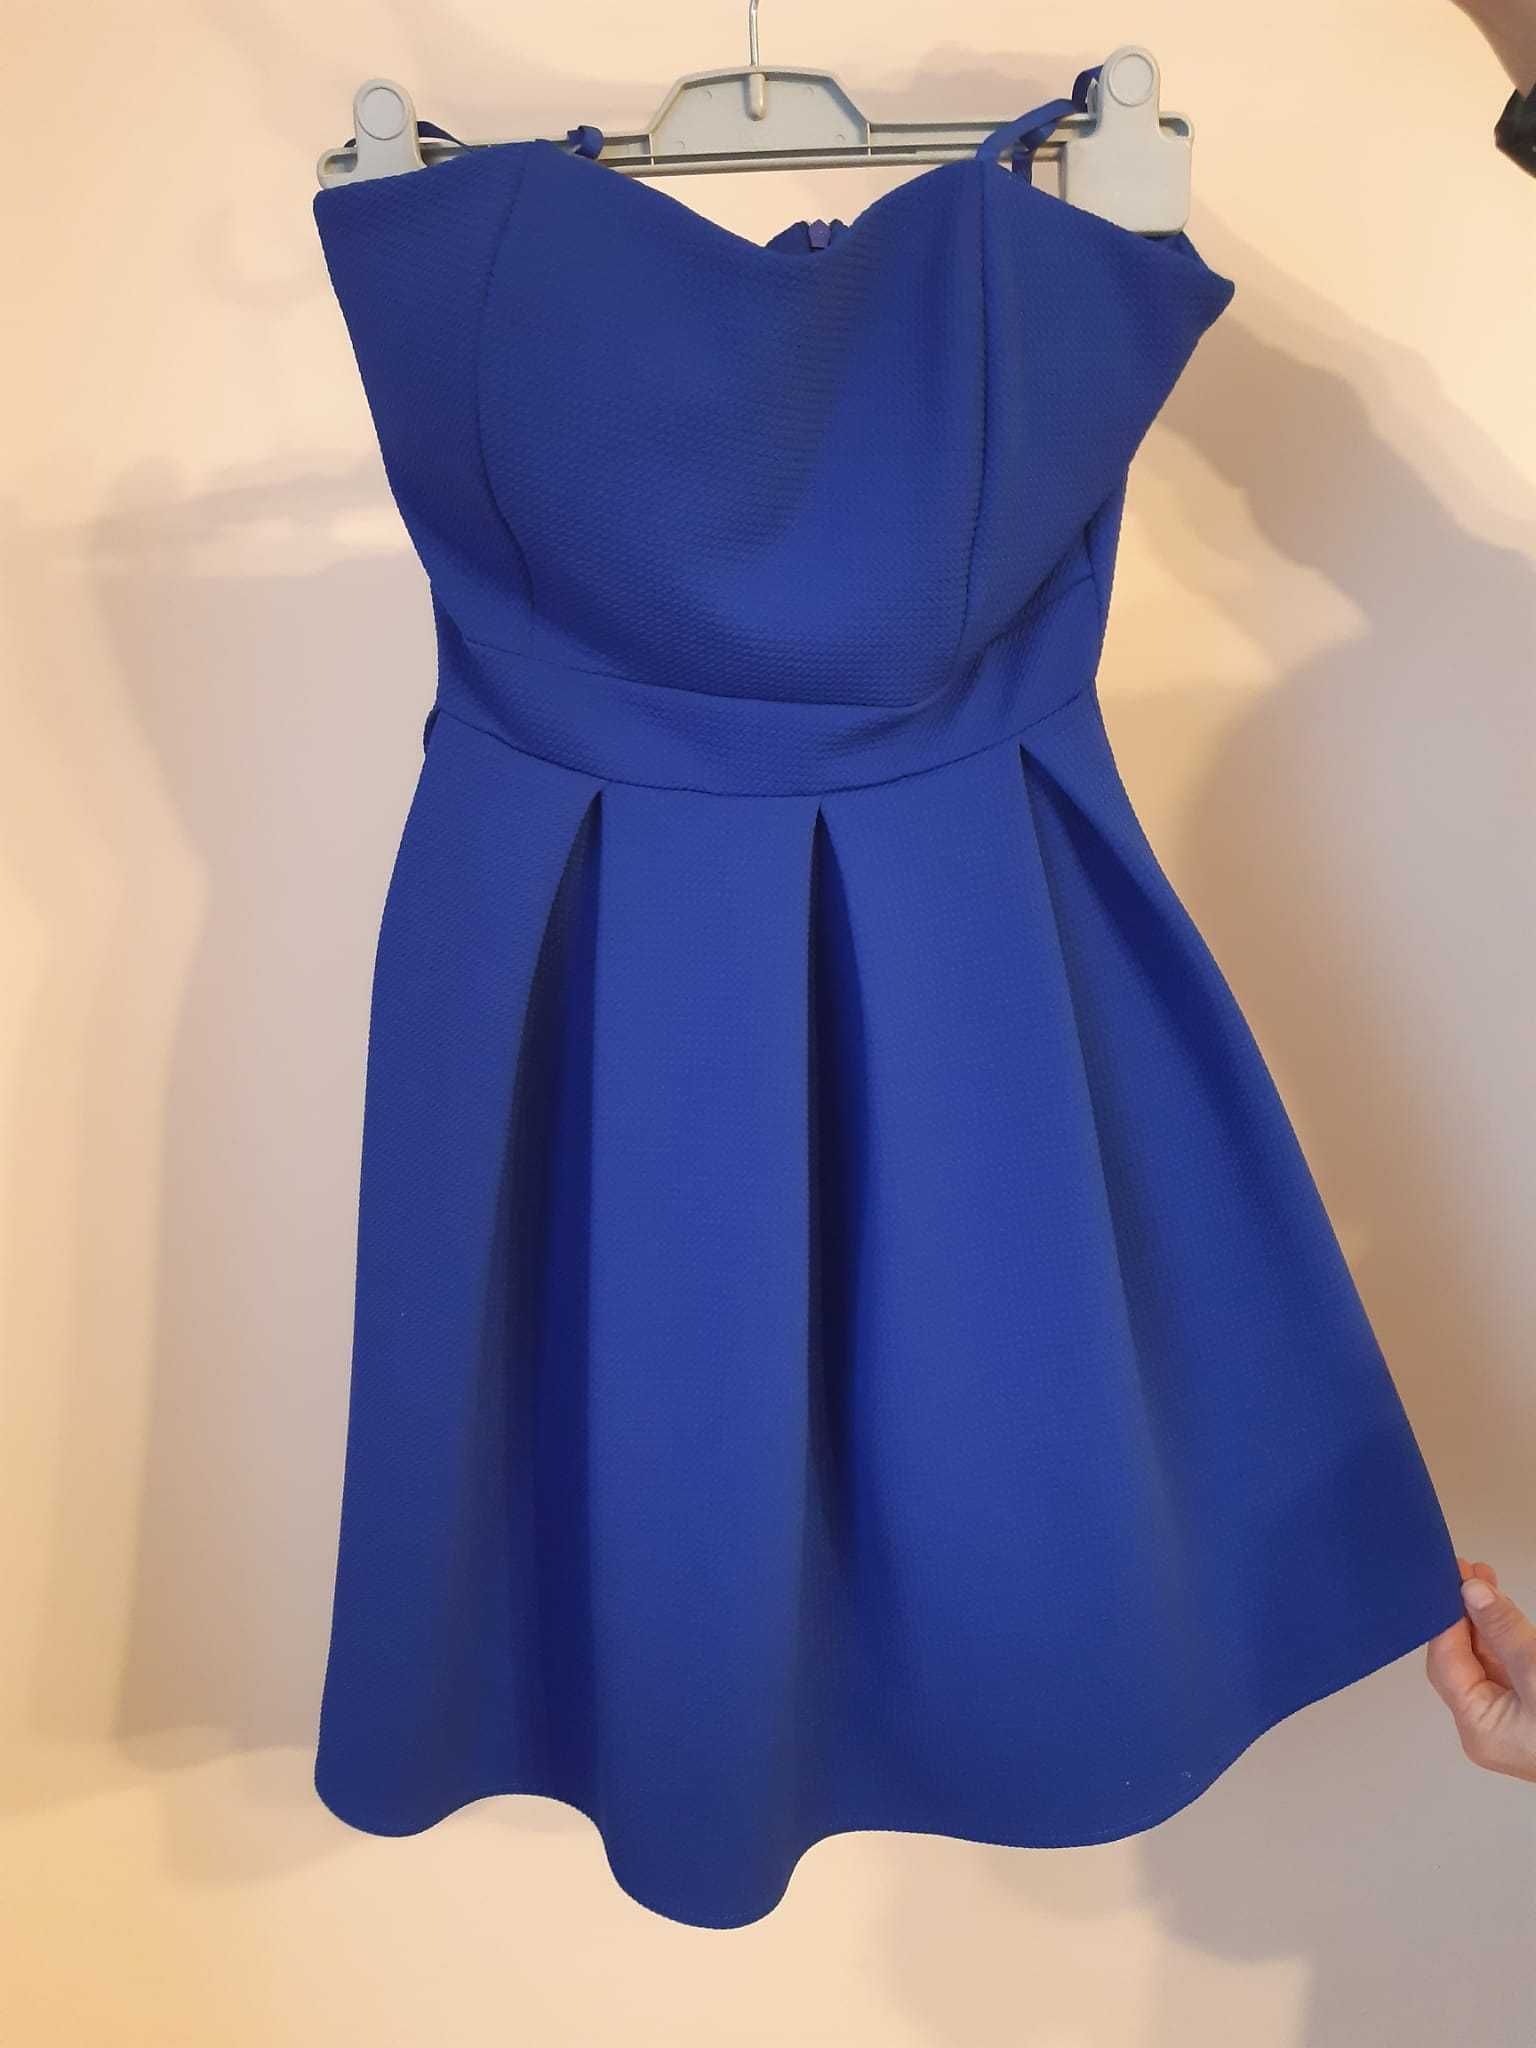 Ciemnoniebieska/granatowa sukienka, rozmiar S